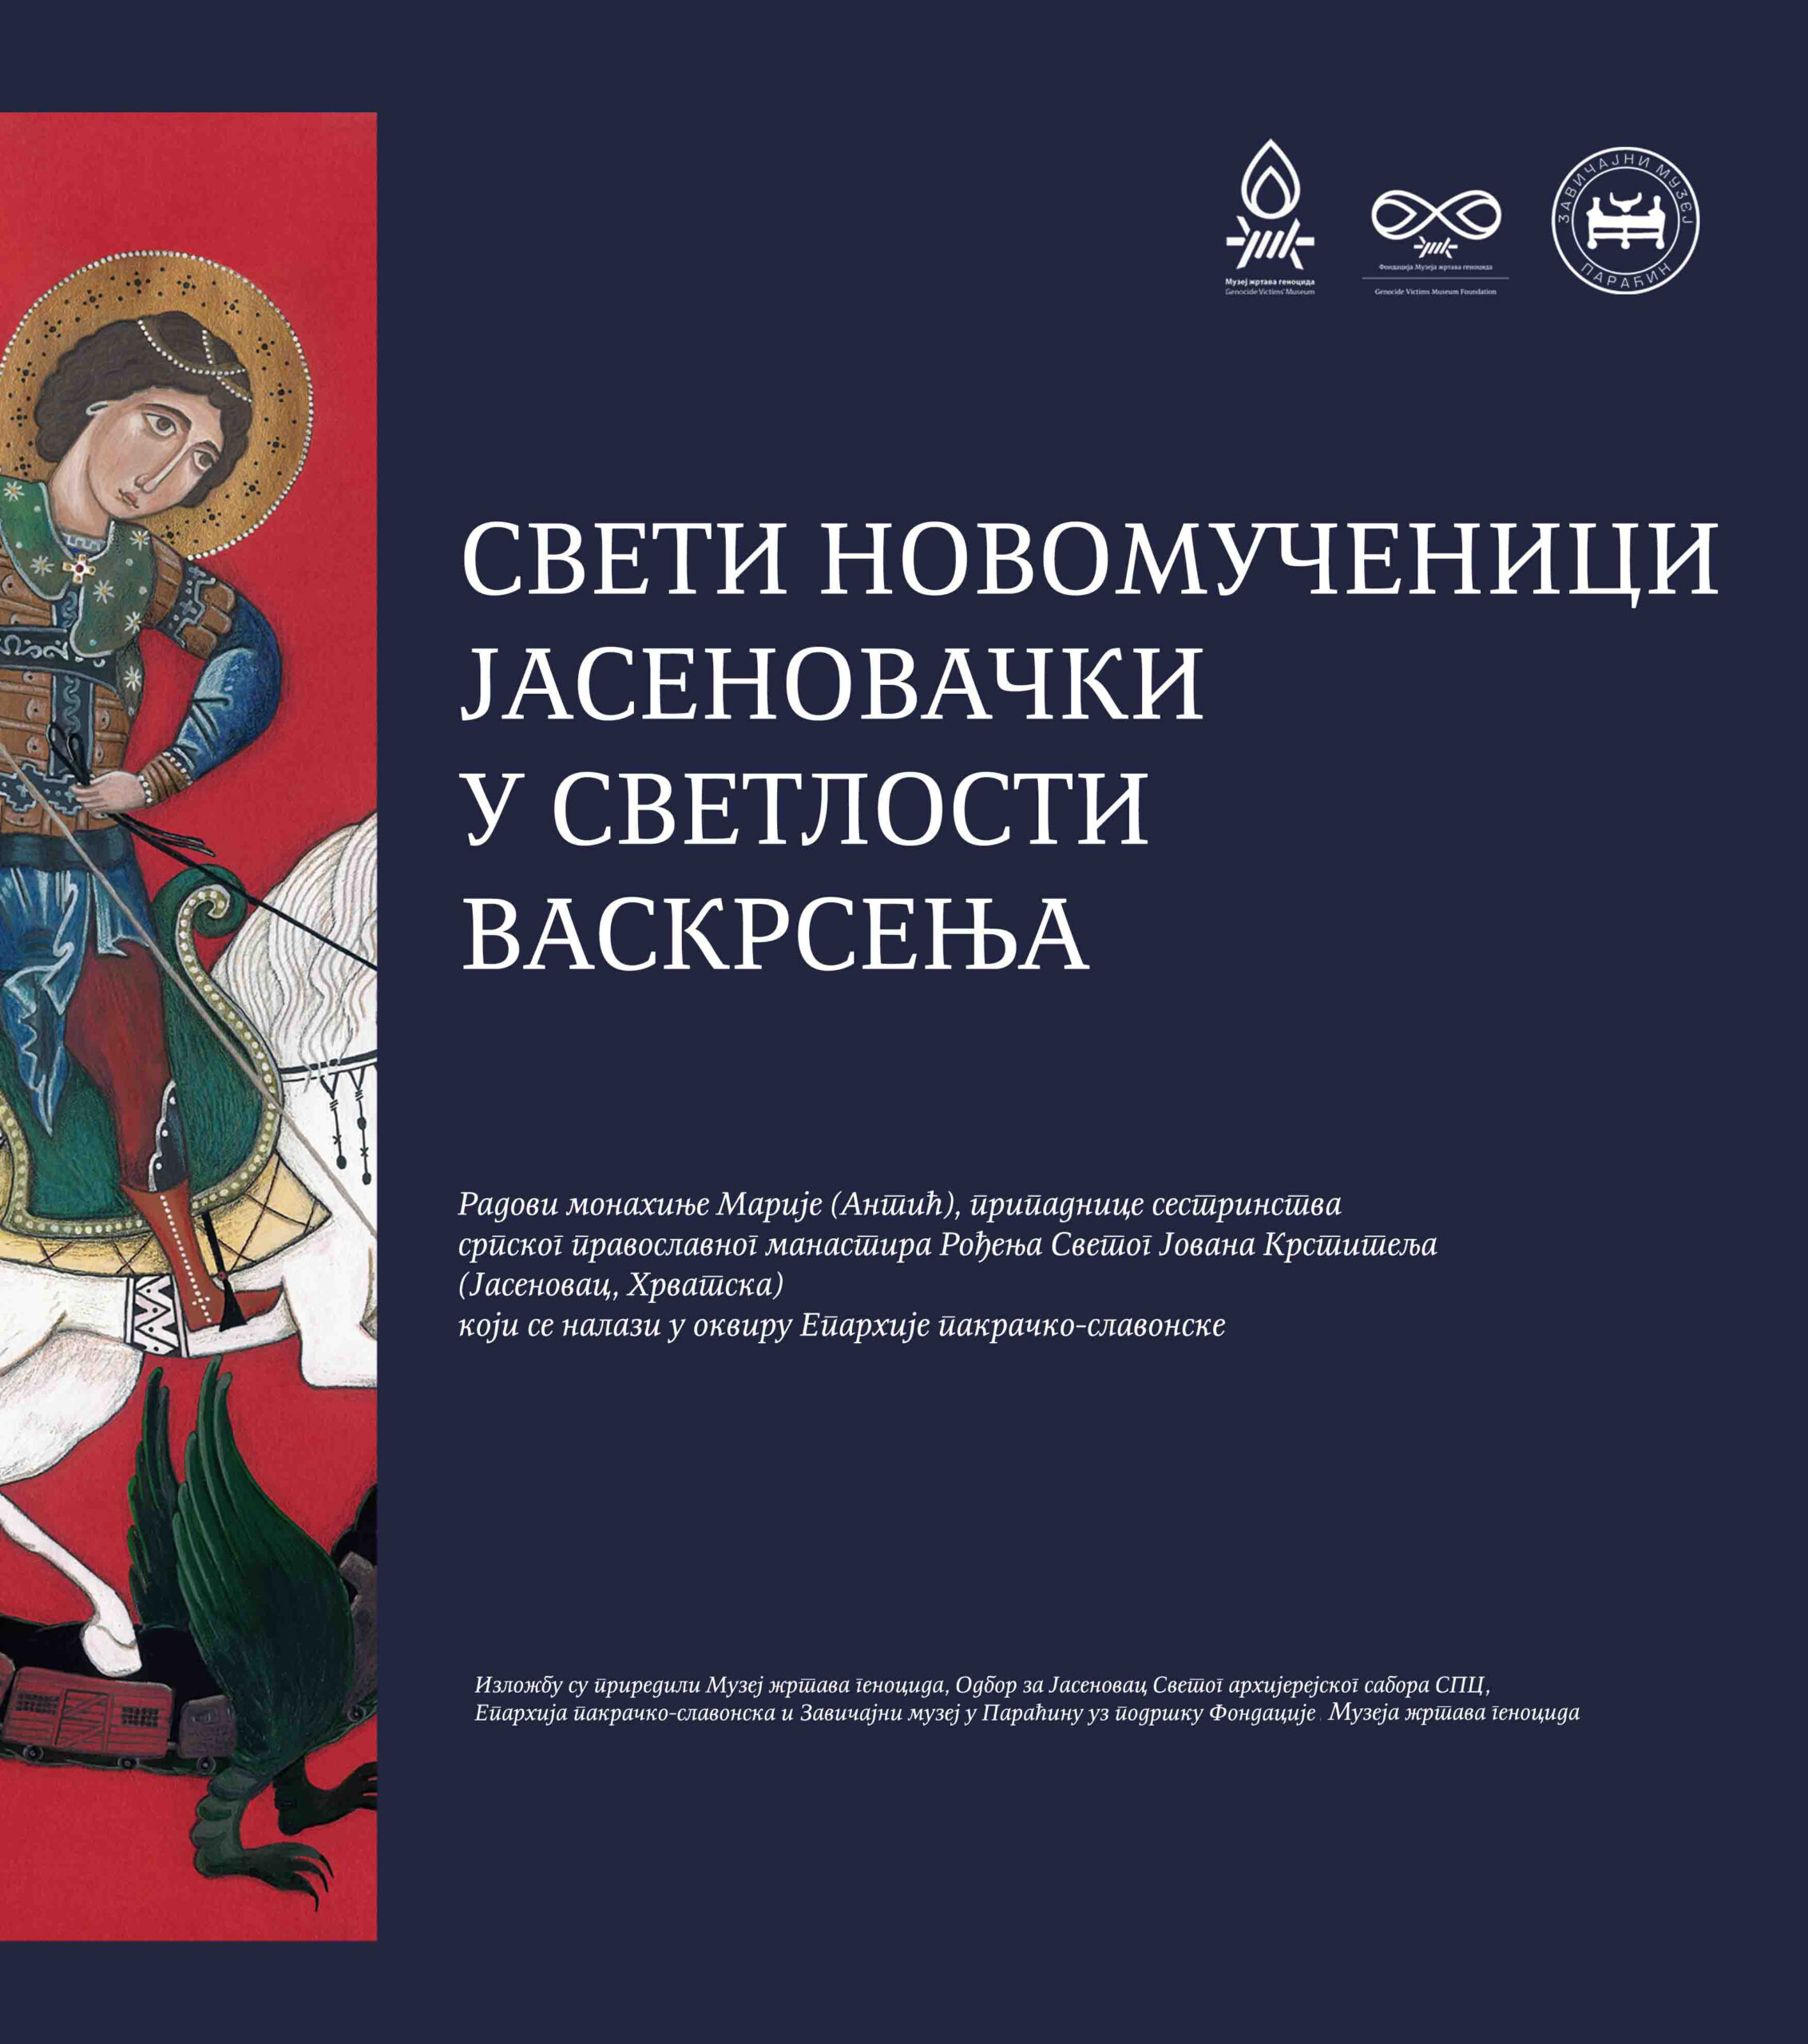 Izložba „Sveti novomučenici jasenovački u svetlosti Vaskrsenja“ u ponedeljak na platou ispred paraćinske biblioteke